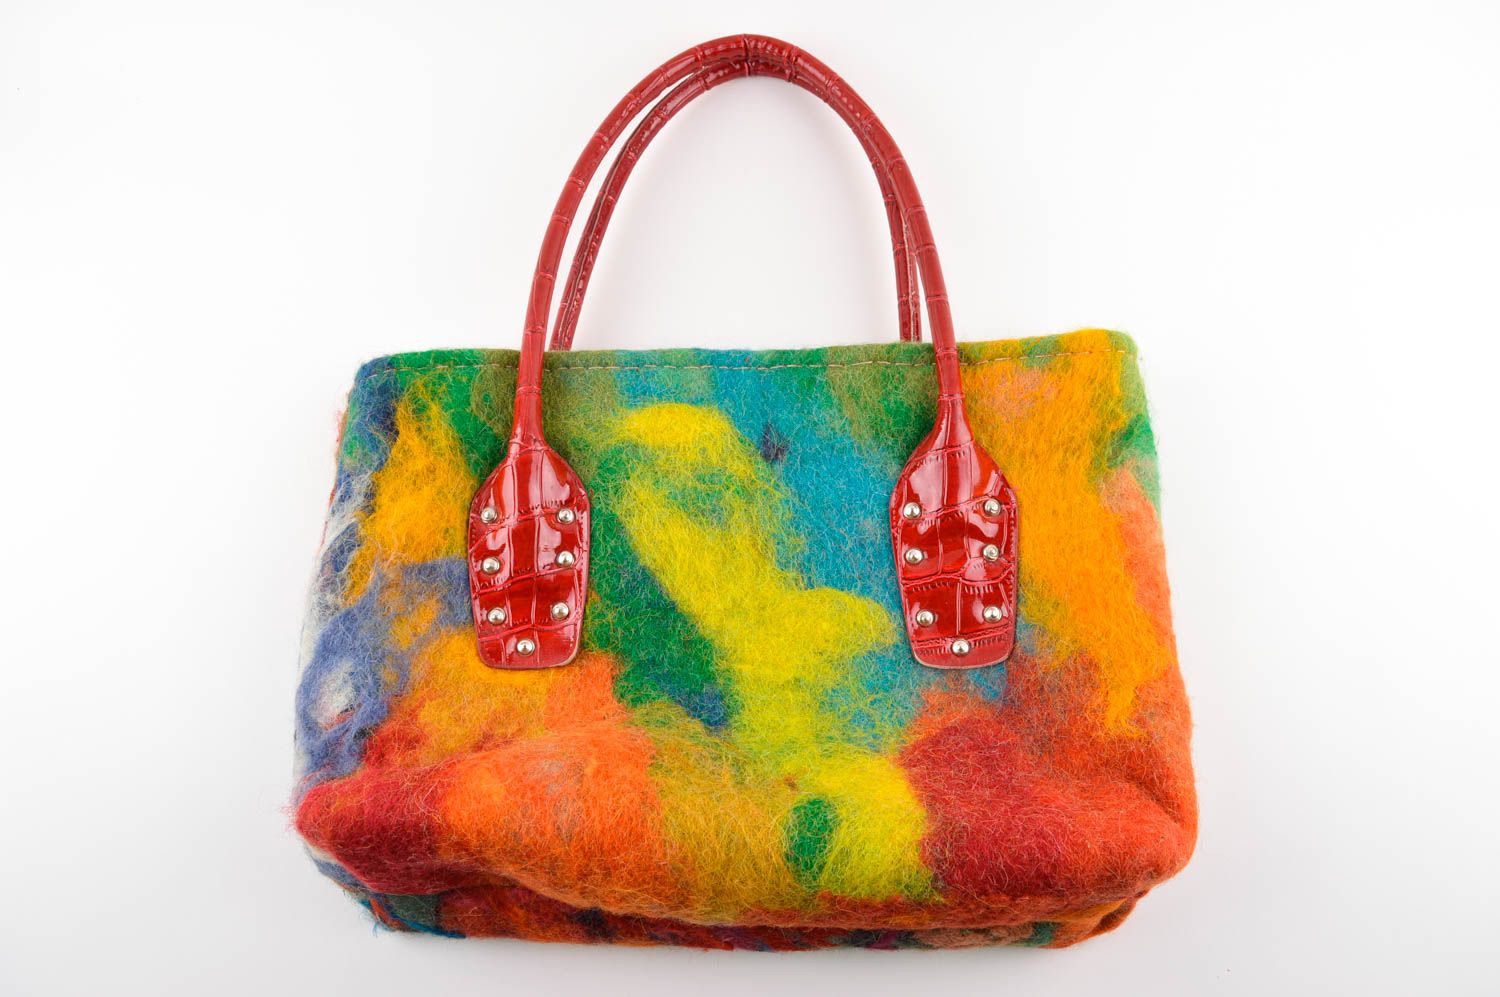 Handmade bag designer handbag woolen bag for women unusual bag gift ideas photo 1